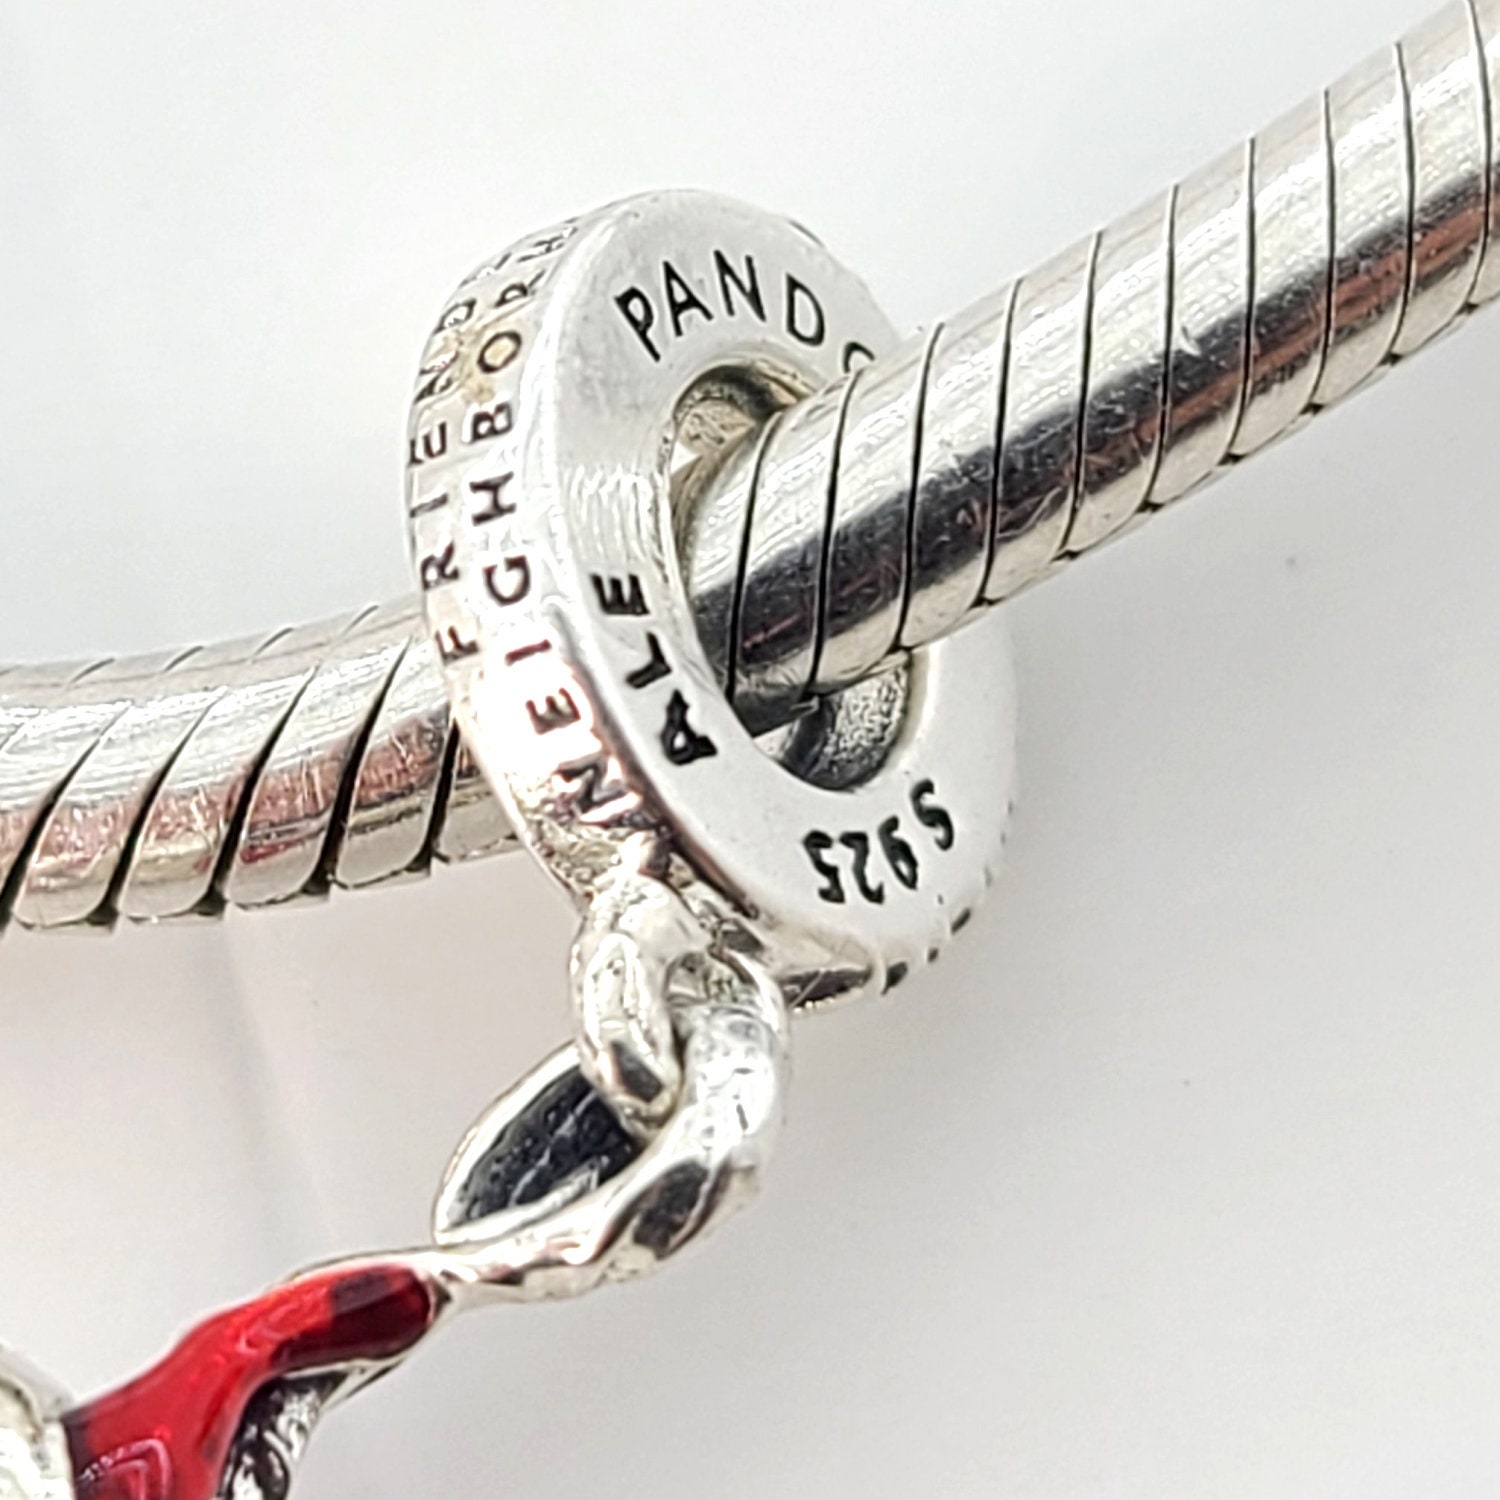 Marvel Stainless Steel Spiderman Charm Bangle Bracelet, 3  Bangle  bracelets with charms, Bangle bracelets, Charm bangle